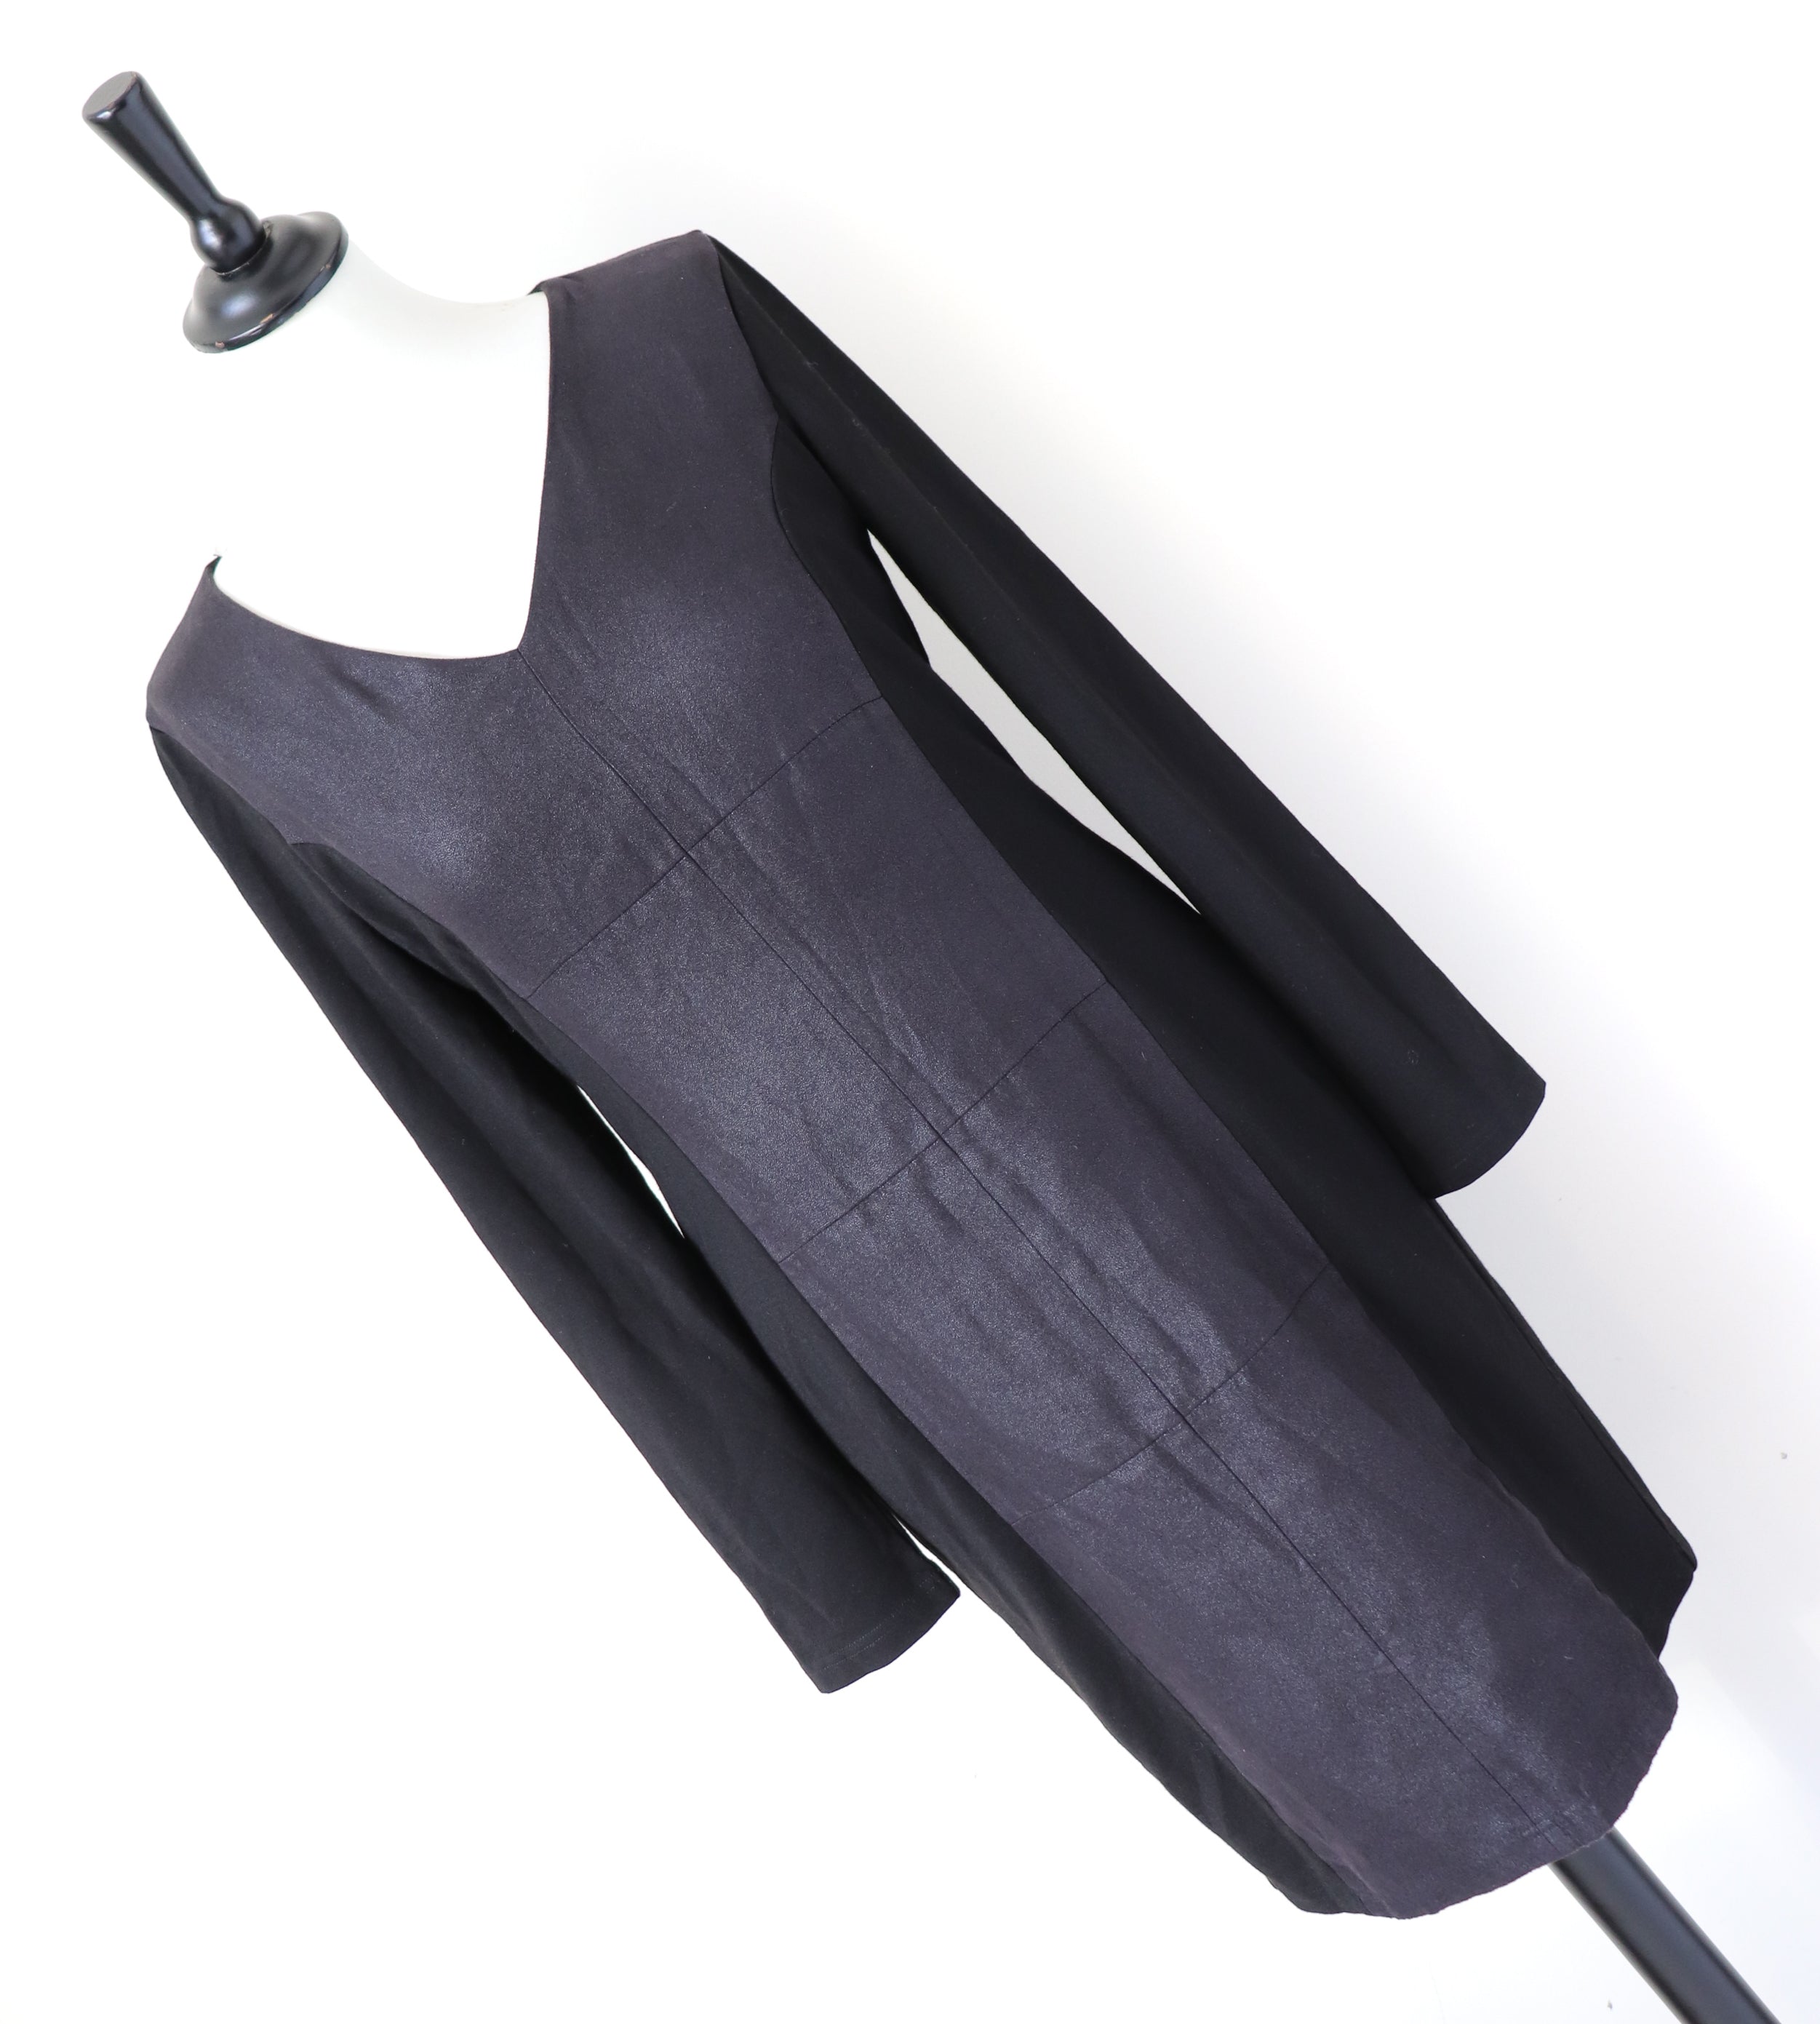 Steffen Schraut Black Dress - Long Sleeves - Body Con LBD -  36 - Fit S / UK 10